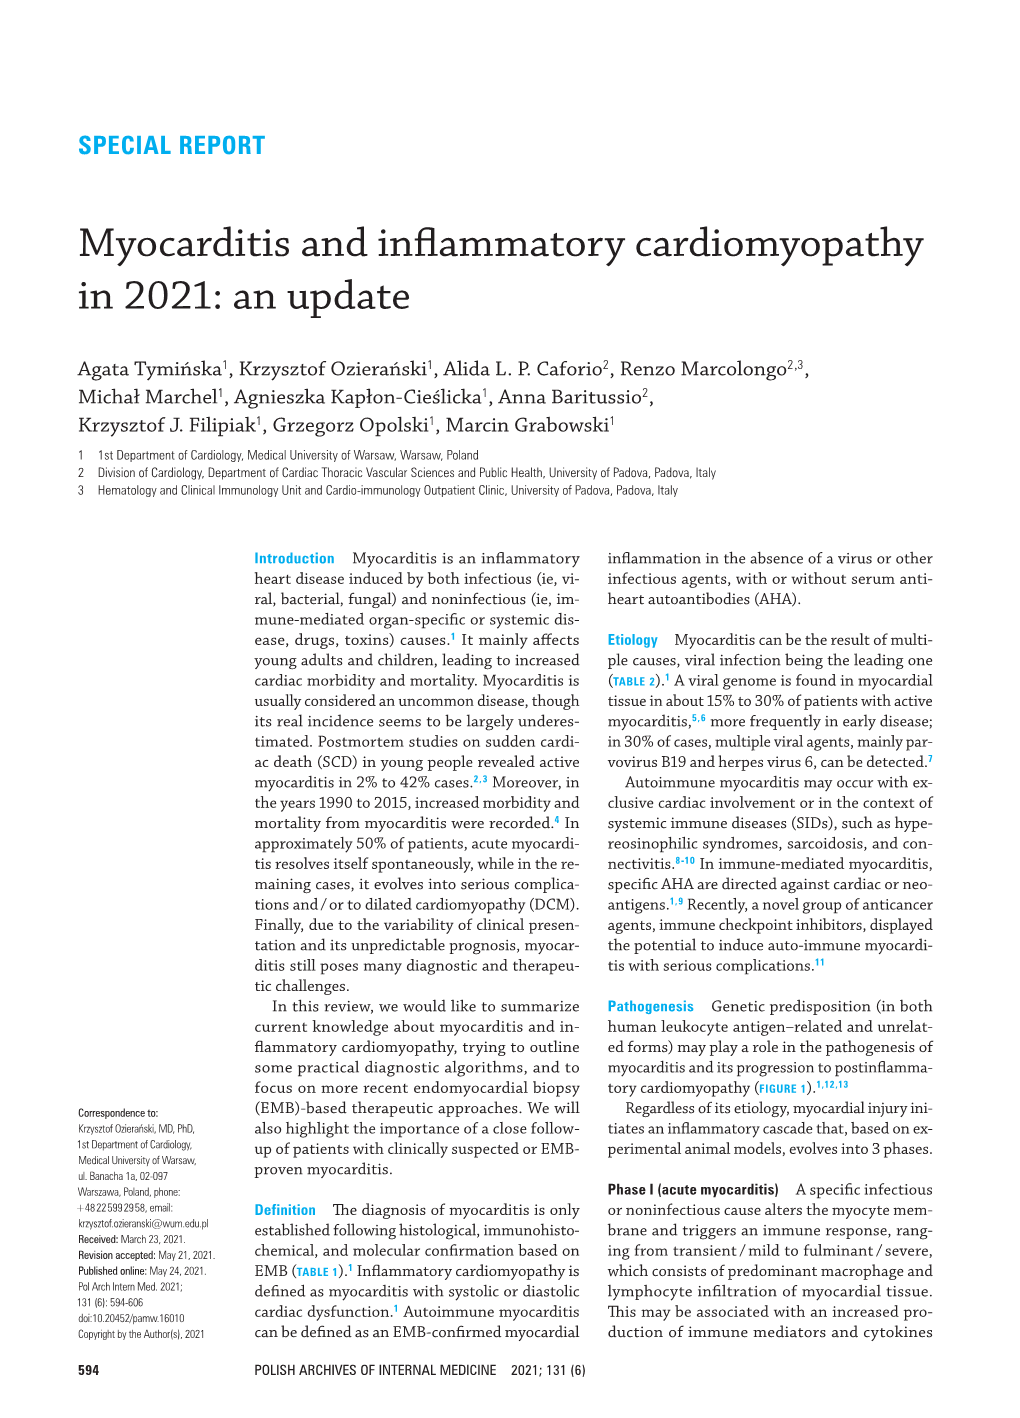 Myocarditis and Inflammatory Cardiomyopathy in 2021: an Update